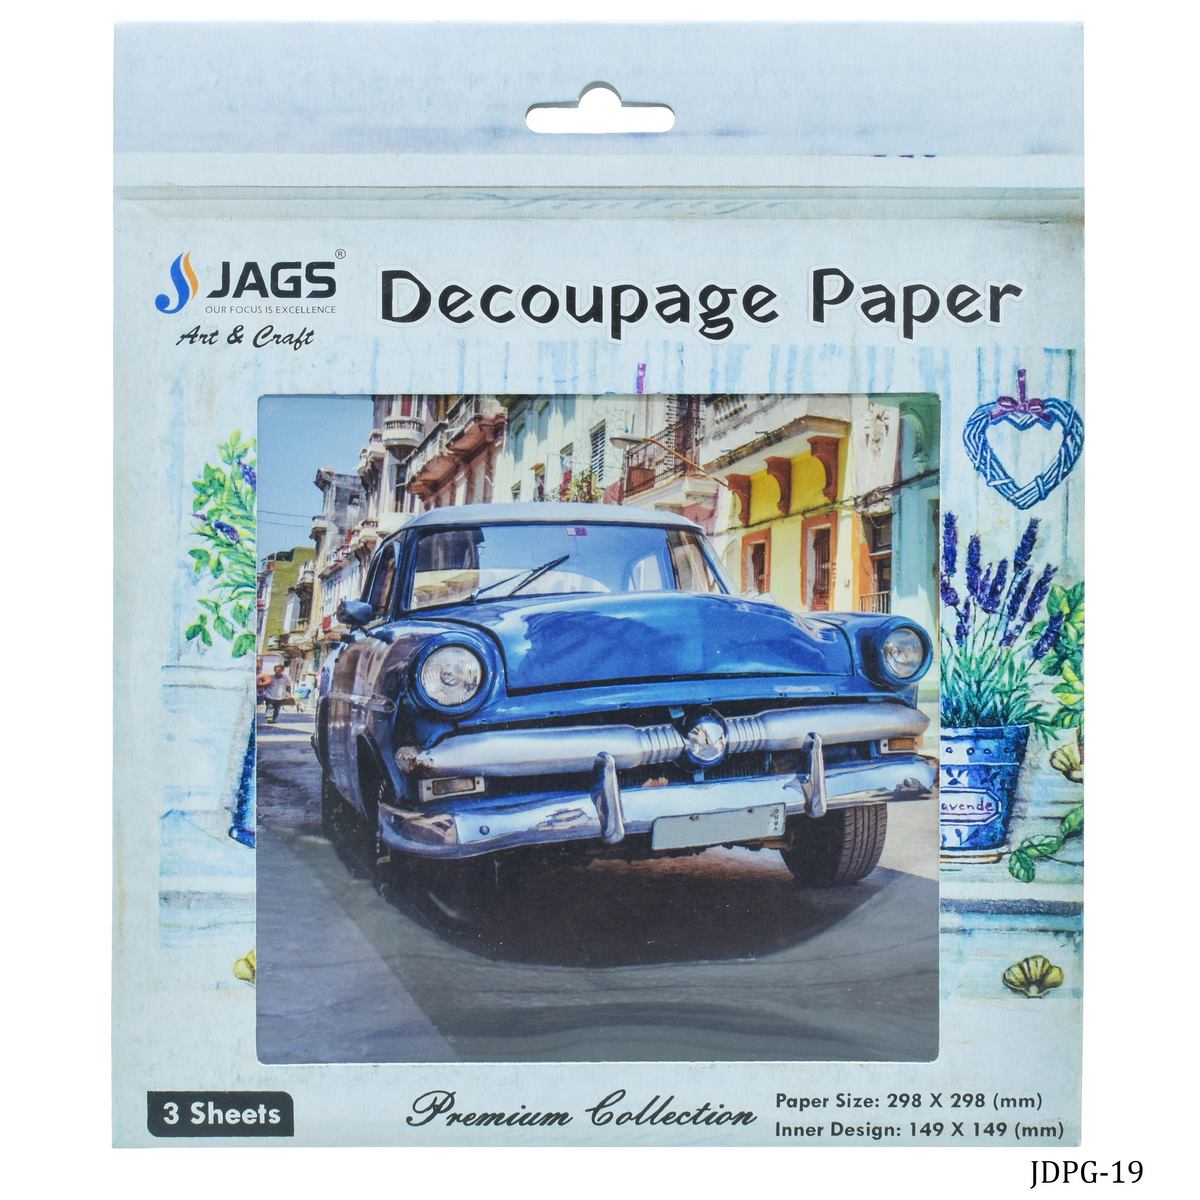 jags-mumbai Decoupage Jags Decoupage Paper Vintag Blue Car JDPG-19